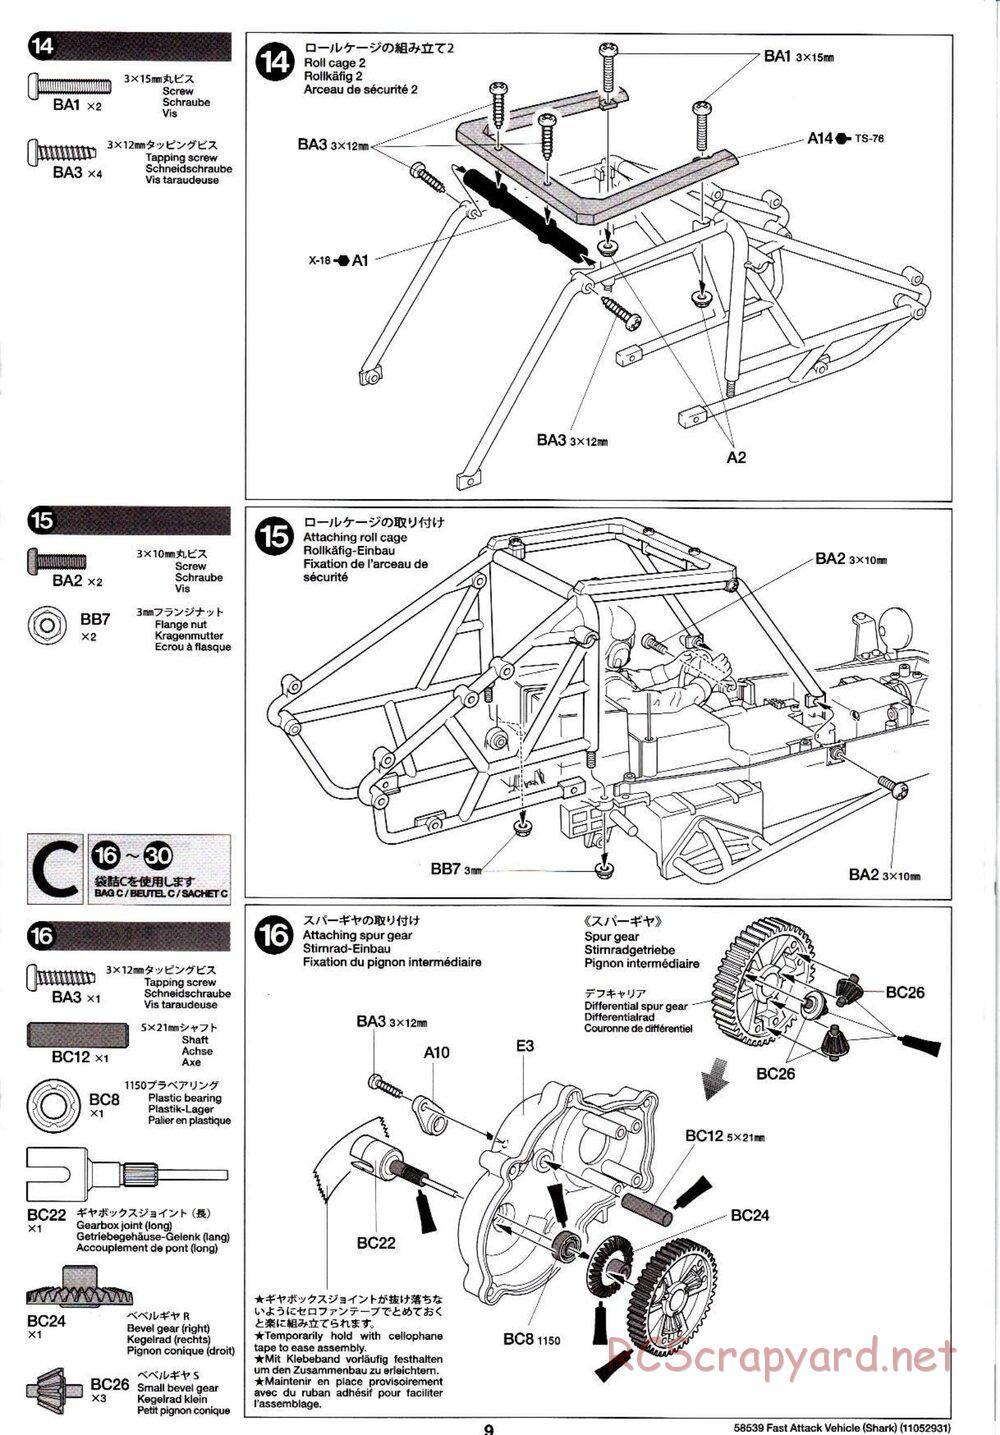 Tamiya - Fast Attack Vehicle w/ Shark Mouth - FAV Chassis - Manual - Page 9